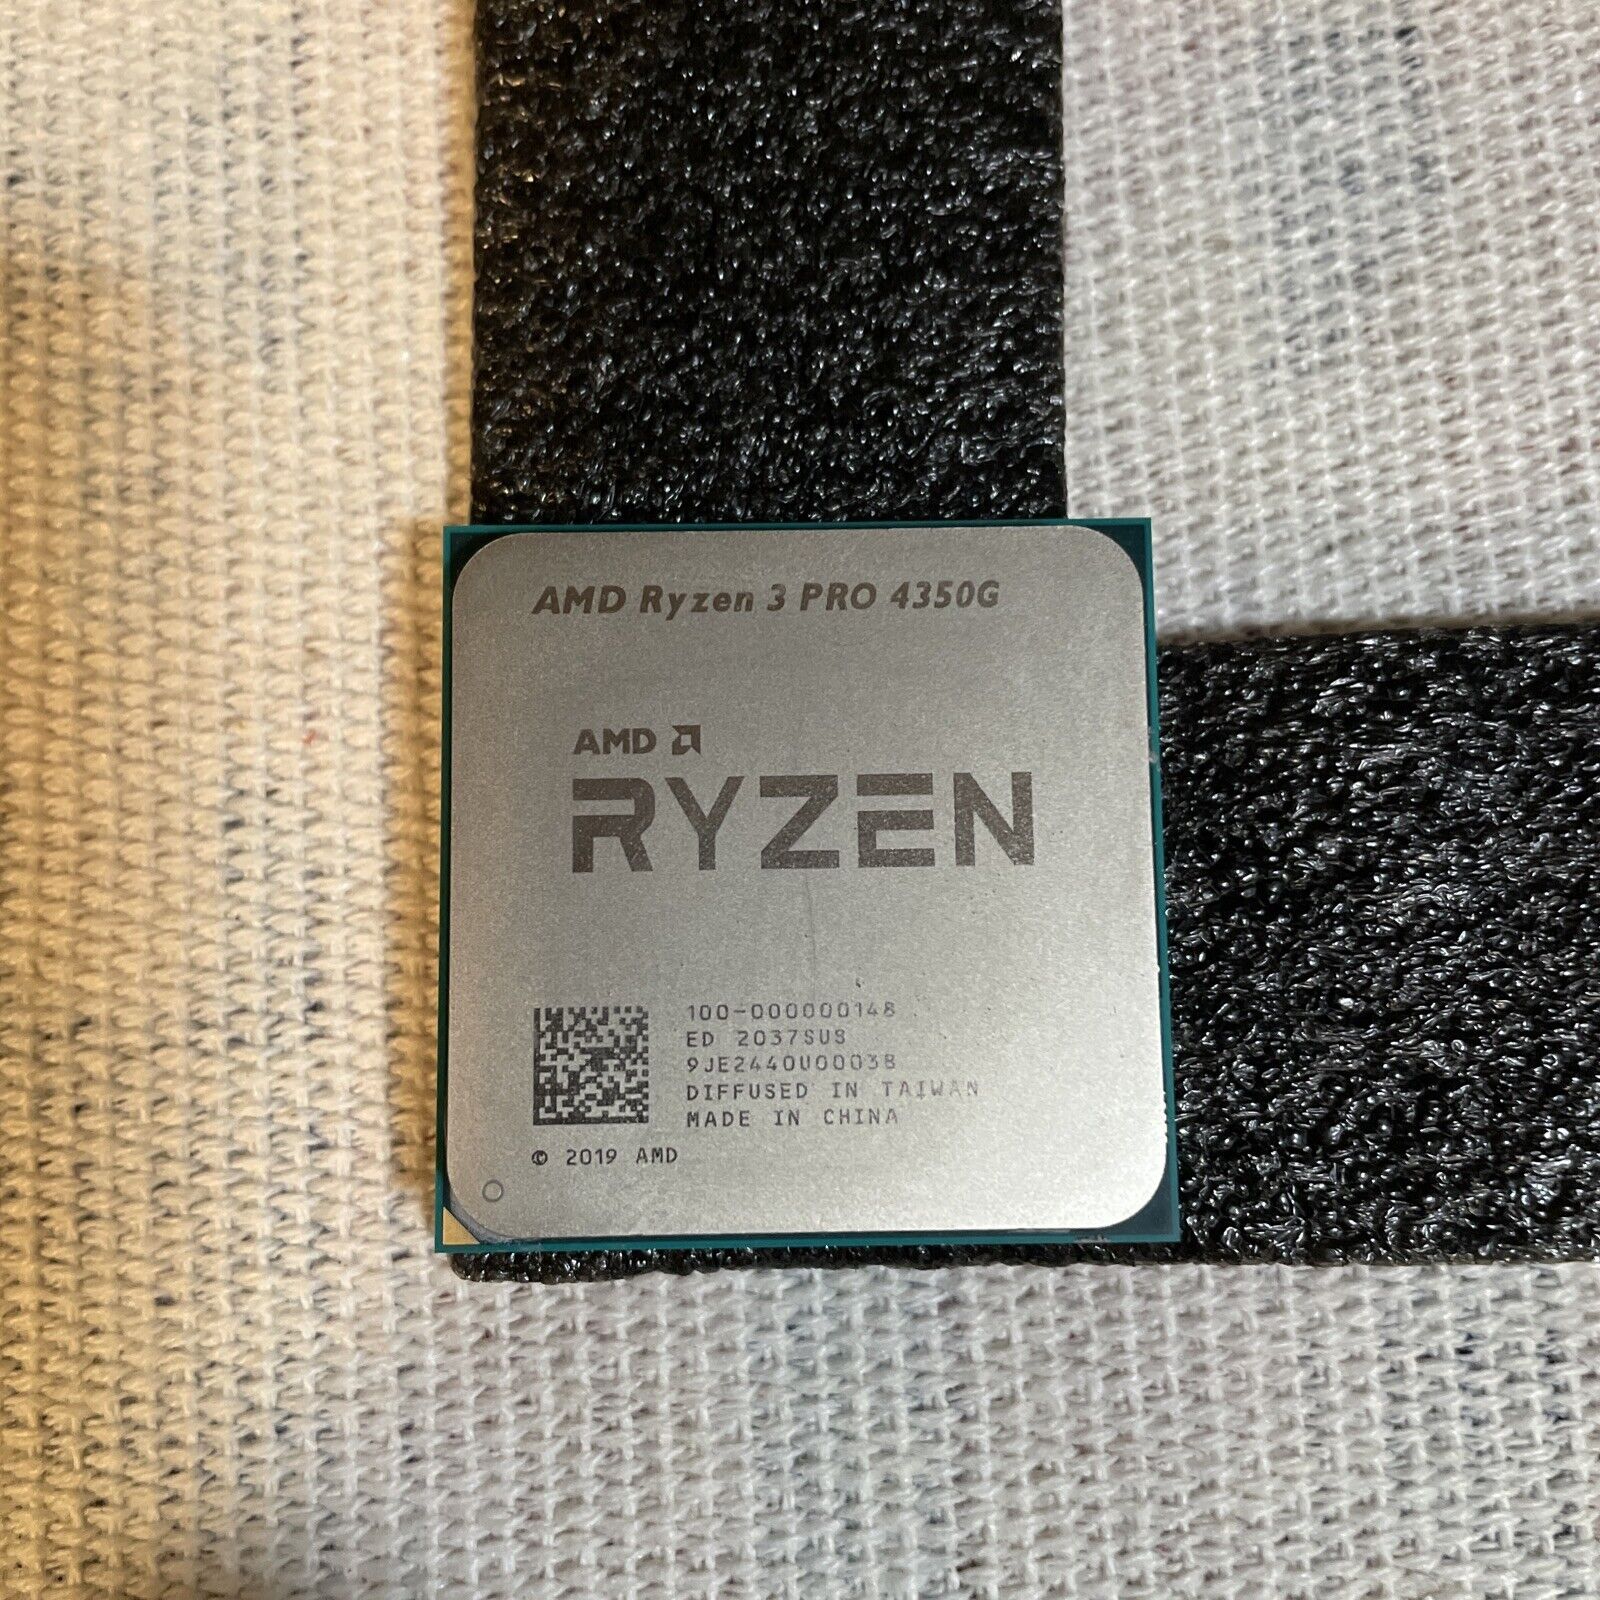 AMD Ryzen 3 Pro 4350g 3.8Ghz 4-core interface am4 CPU processor